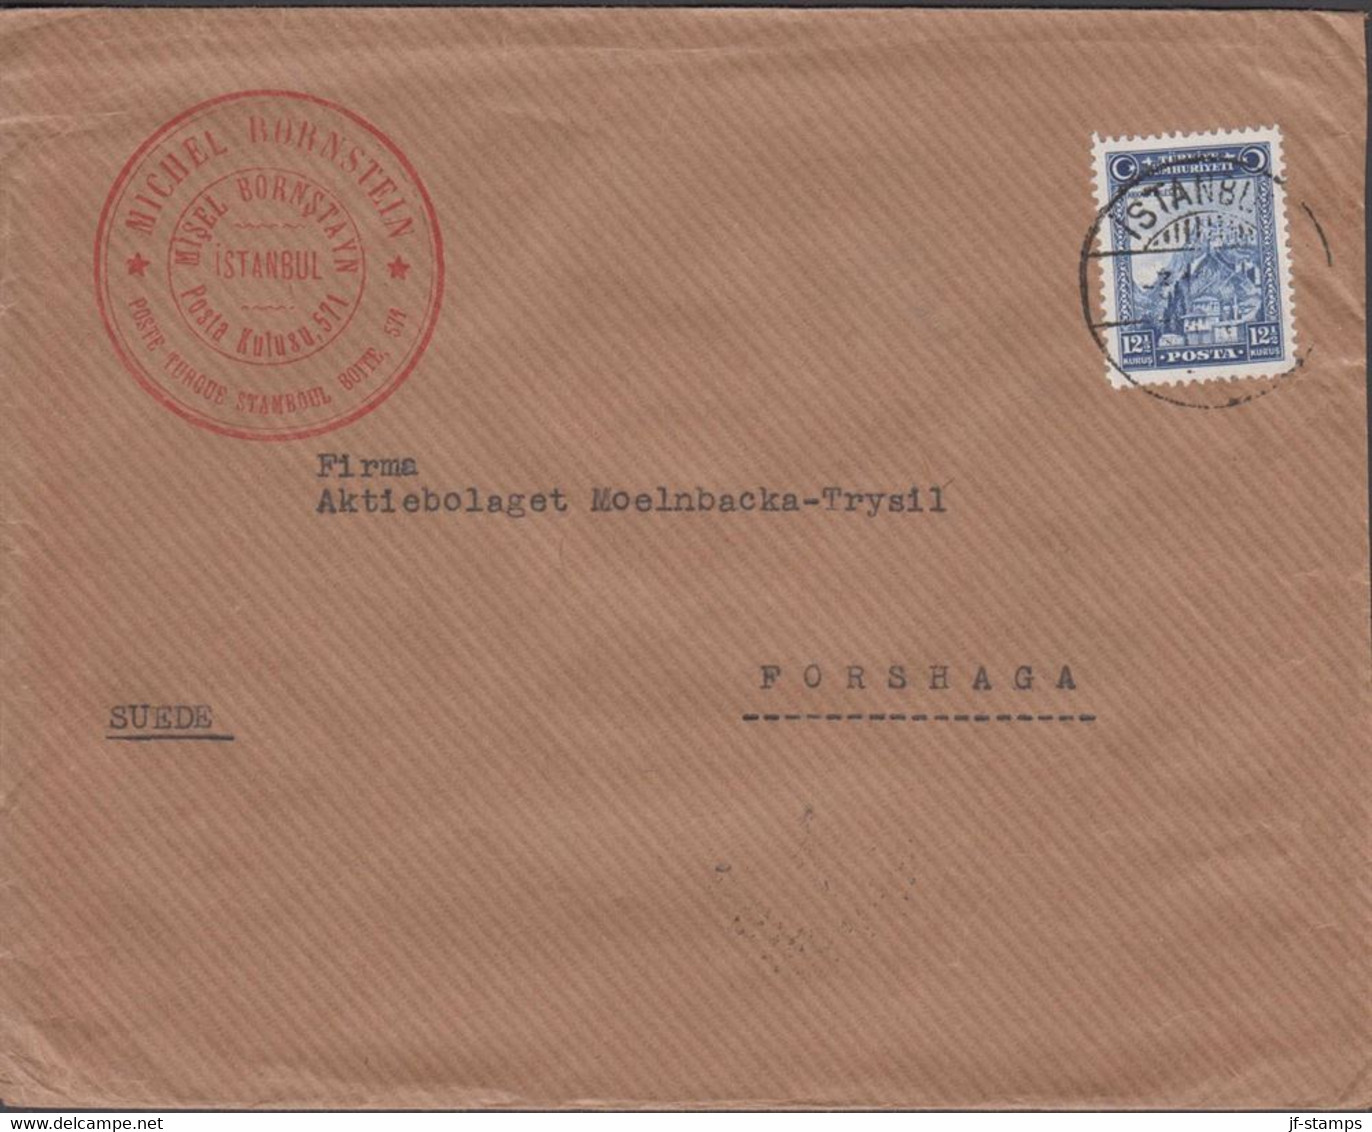 1930. TÜRKIYE Cover To Forshaga, Sweden With 12½ KURUS Ankara Fort Issue TÜRKİYE CUMHURİYETİ ... (Michel 889) - JF436492 - Brieven En Documenten